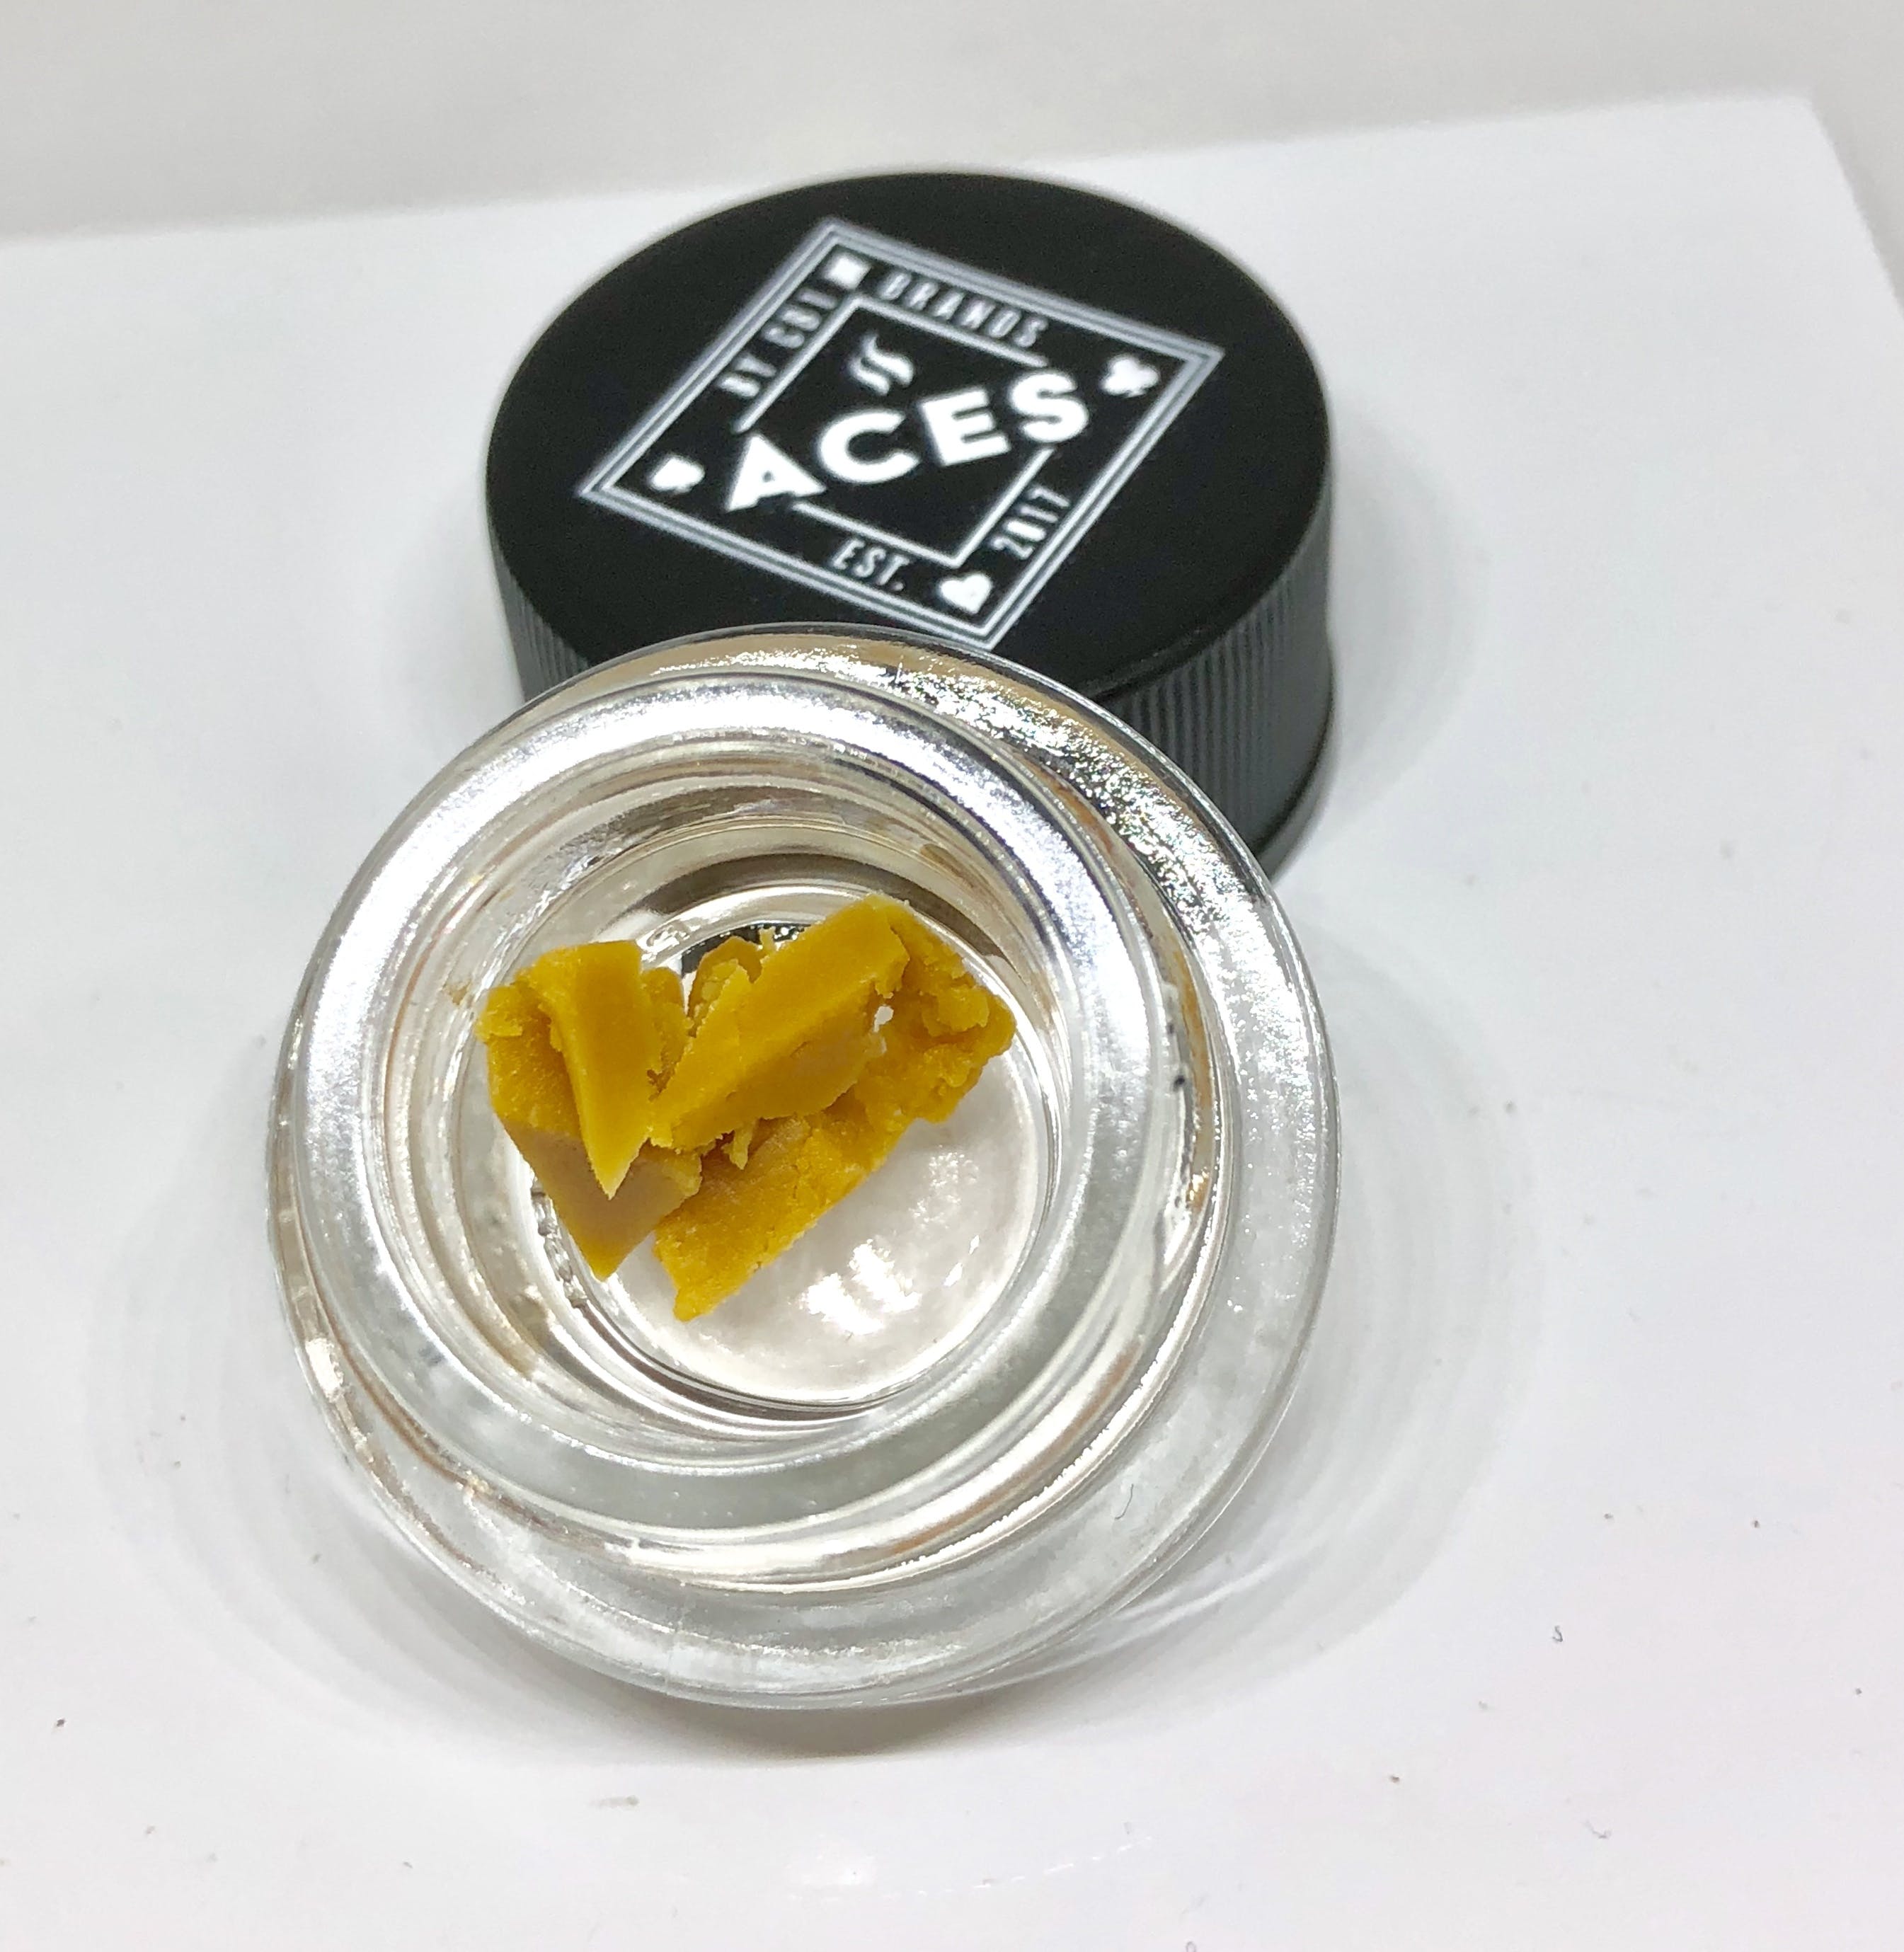 wax-super-lemon-aces-extracts